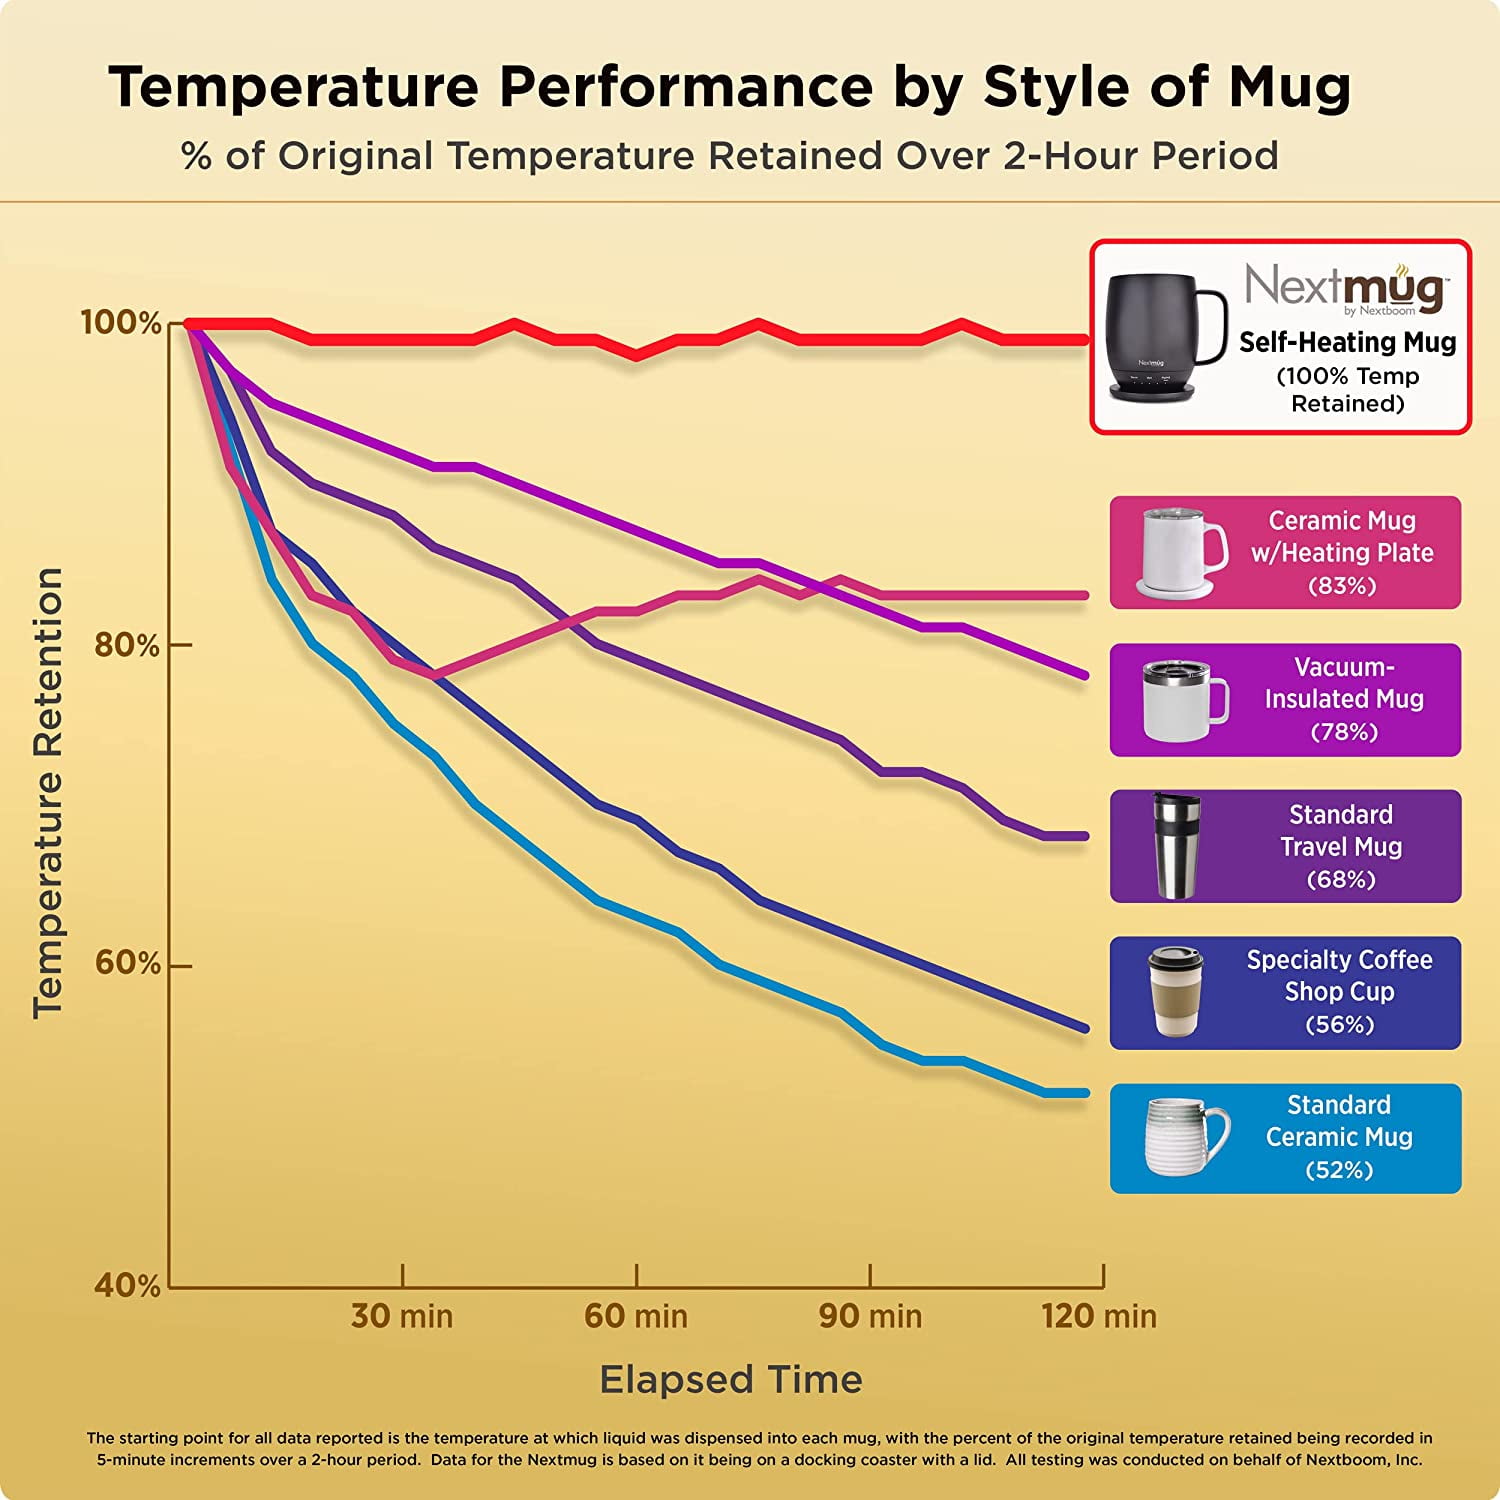 Nextmug Temperature-Controlled Self-heating 14-oz Mug ,Sage